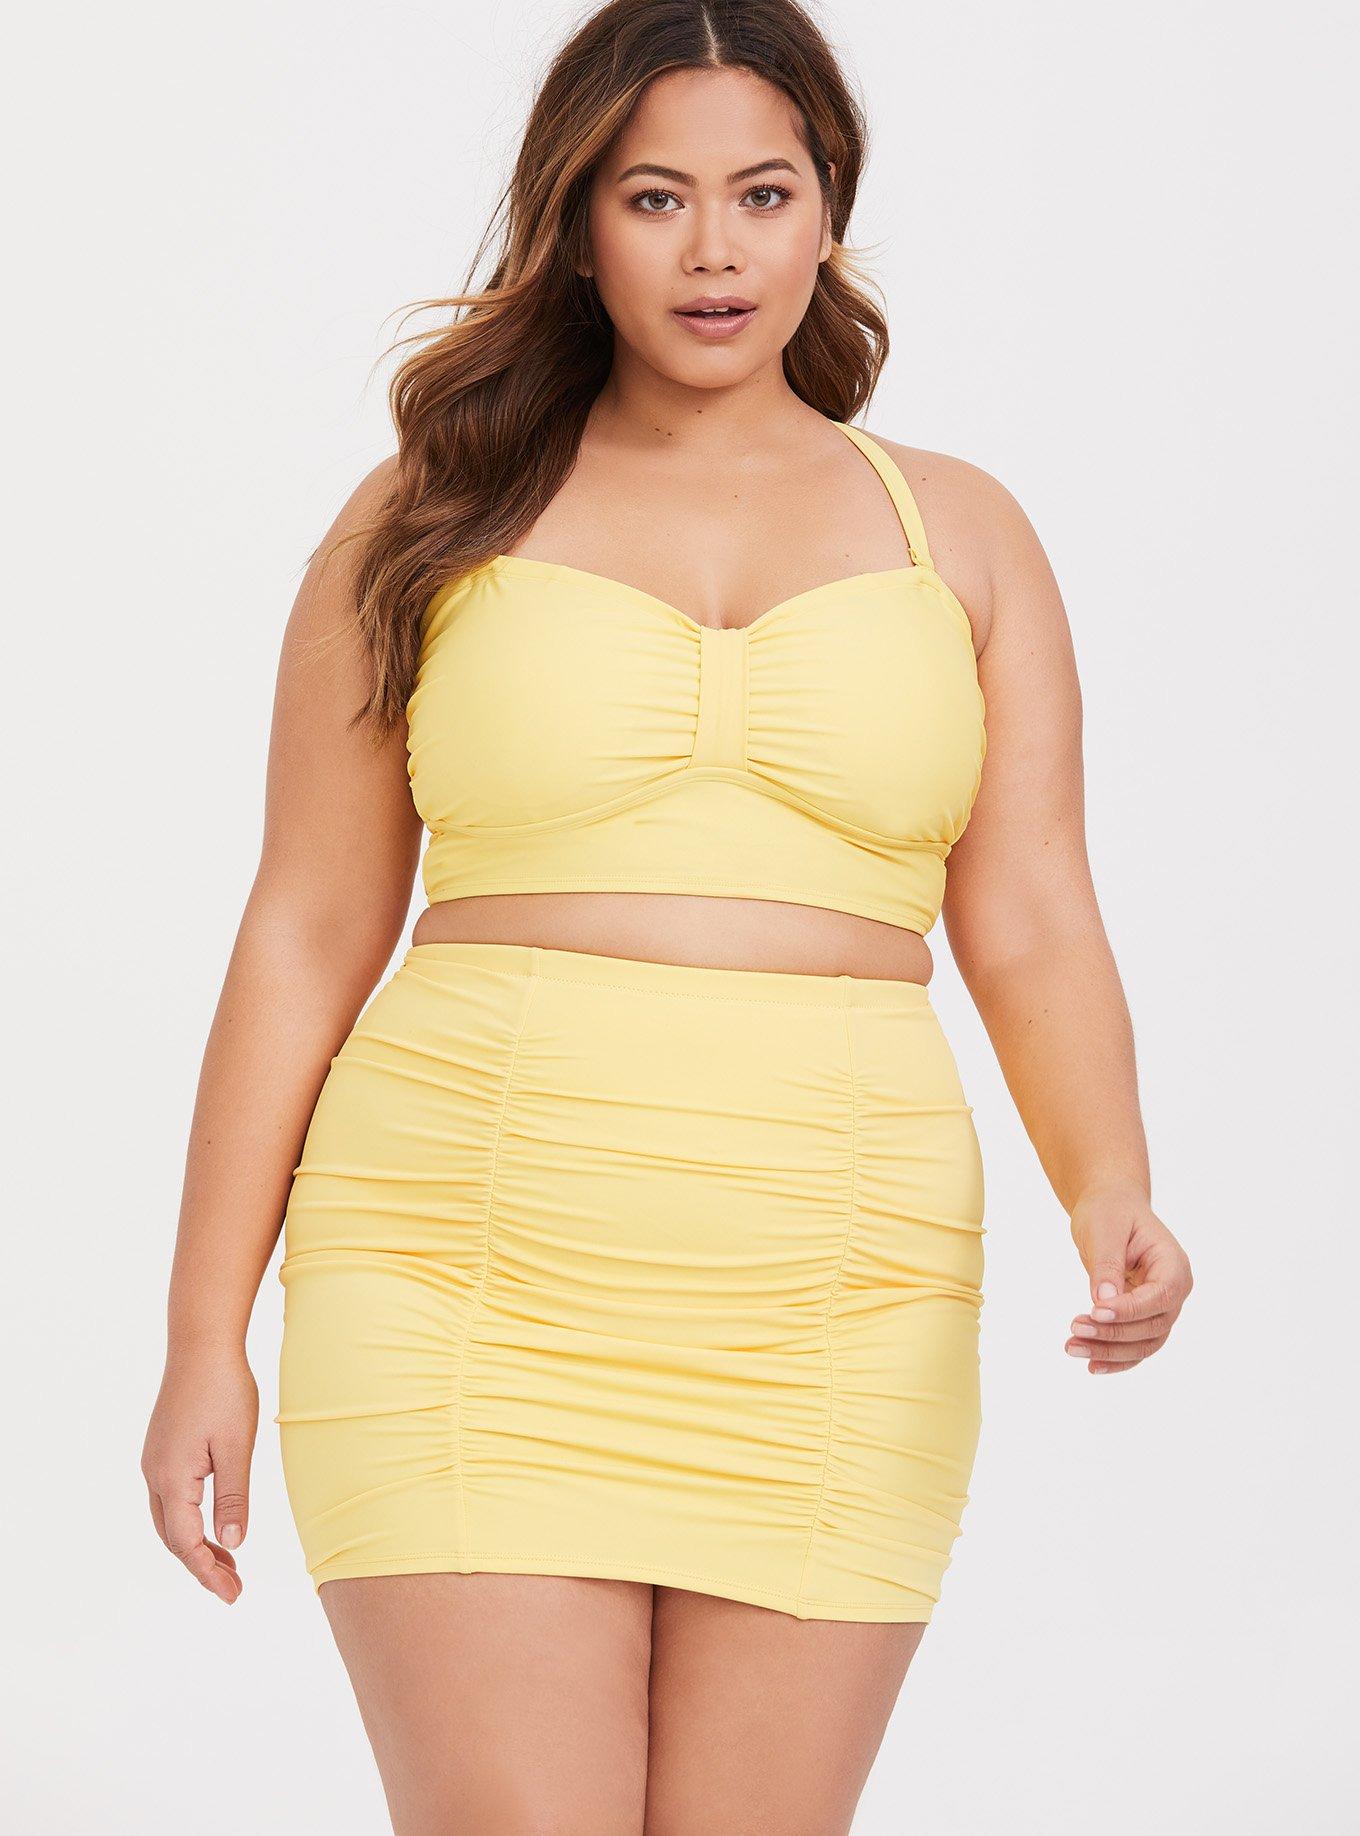 Plus Size - Disney Belle Yellow Wireless Strapless Bikini Top - Torrid